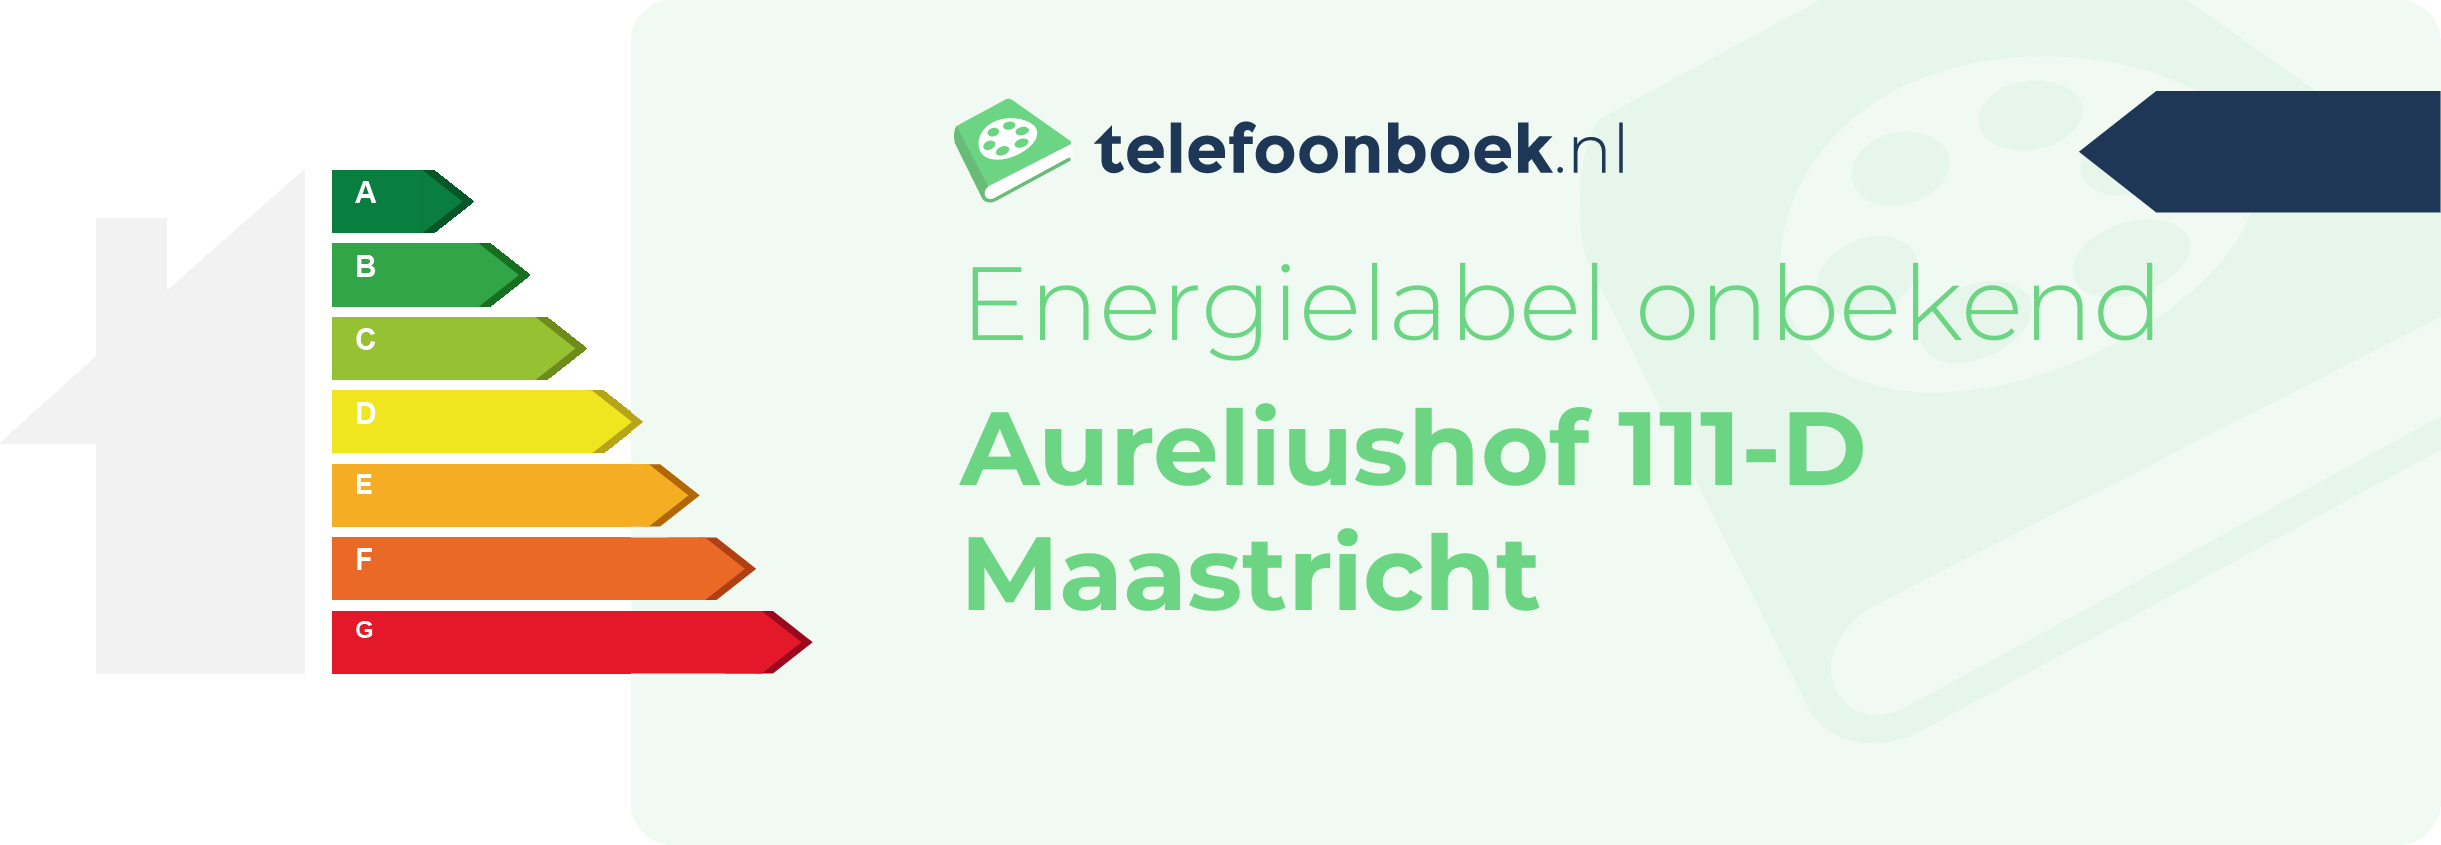 Energielabel Aureliushof 111-D Maastricht